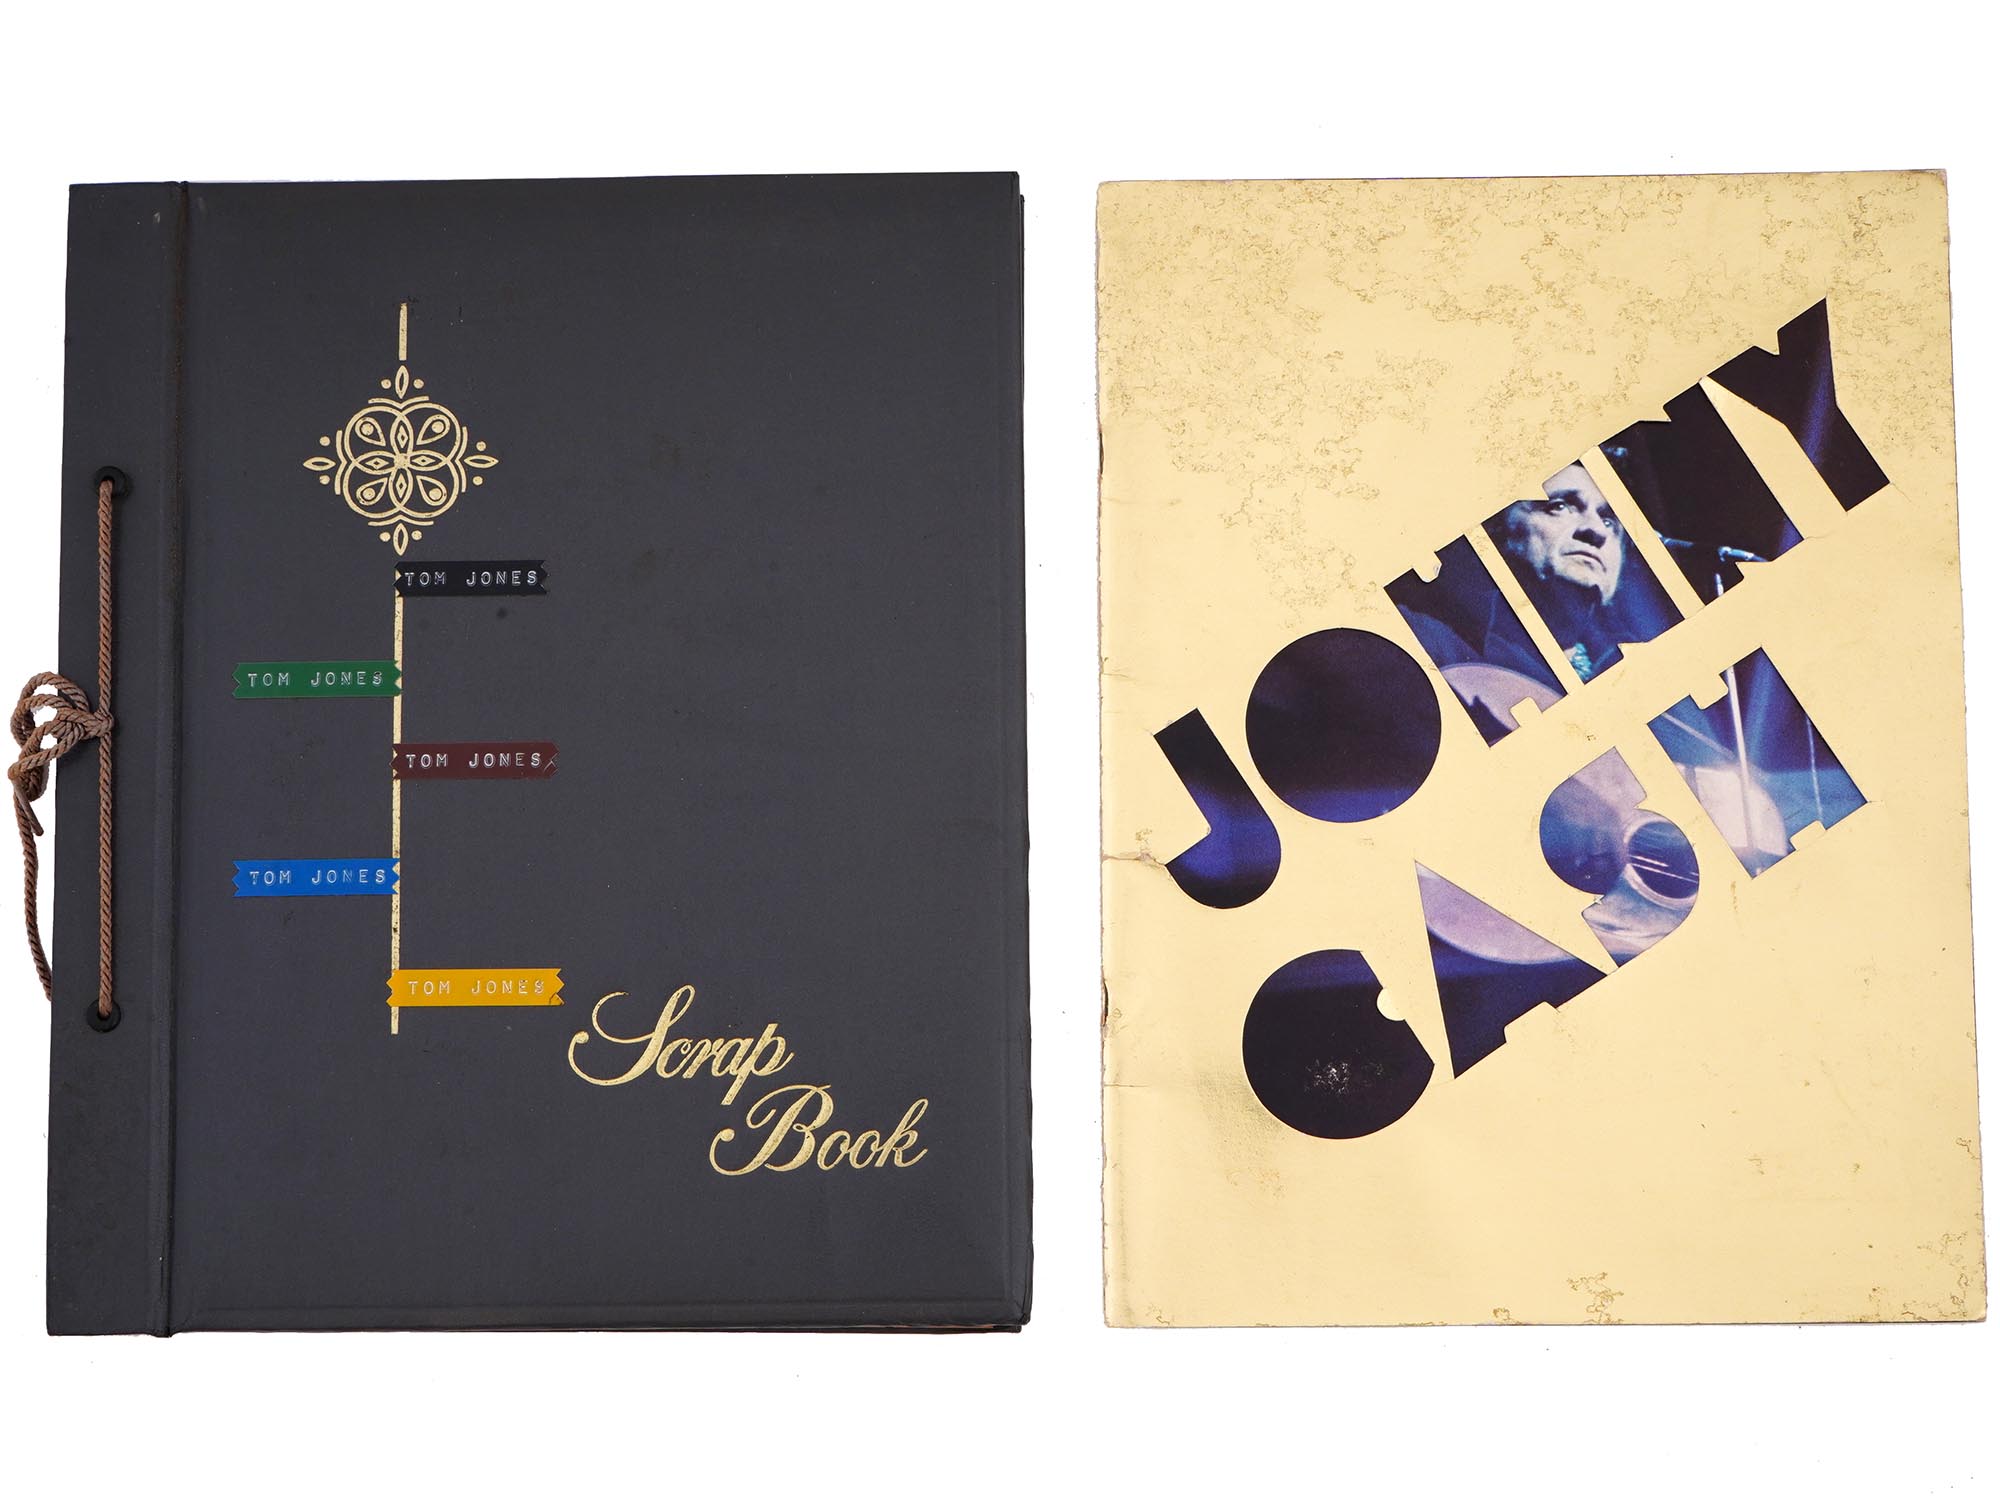 1975 JOHNNY CASH TOUR BOOK AND TOM JONES ALBUM PIC-1